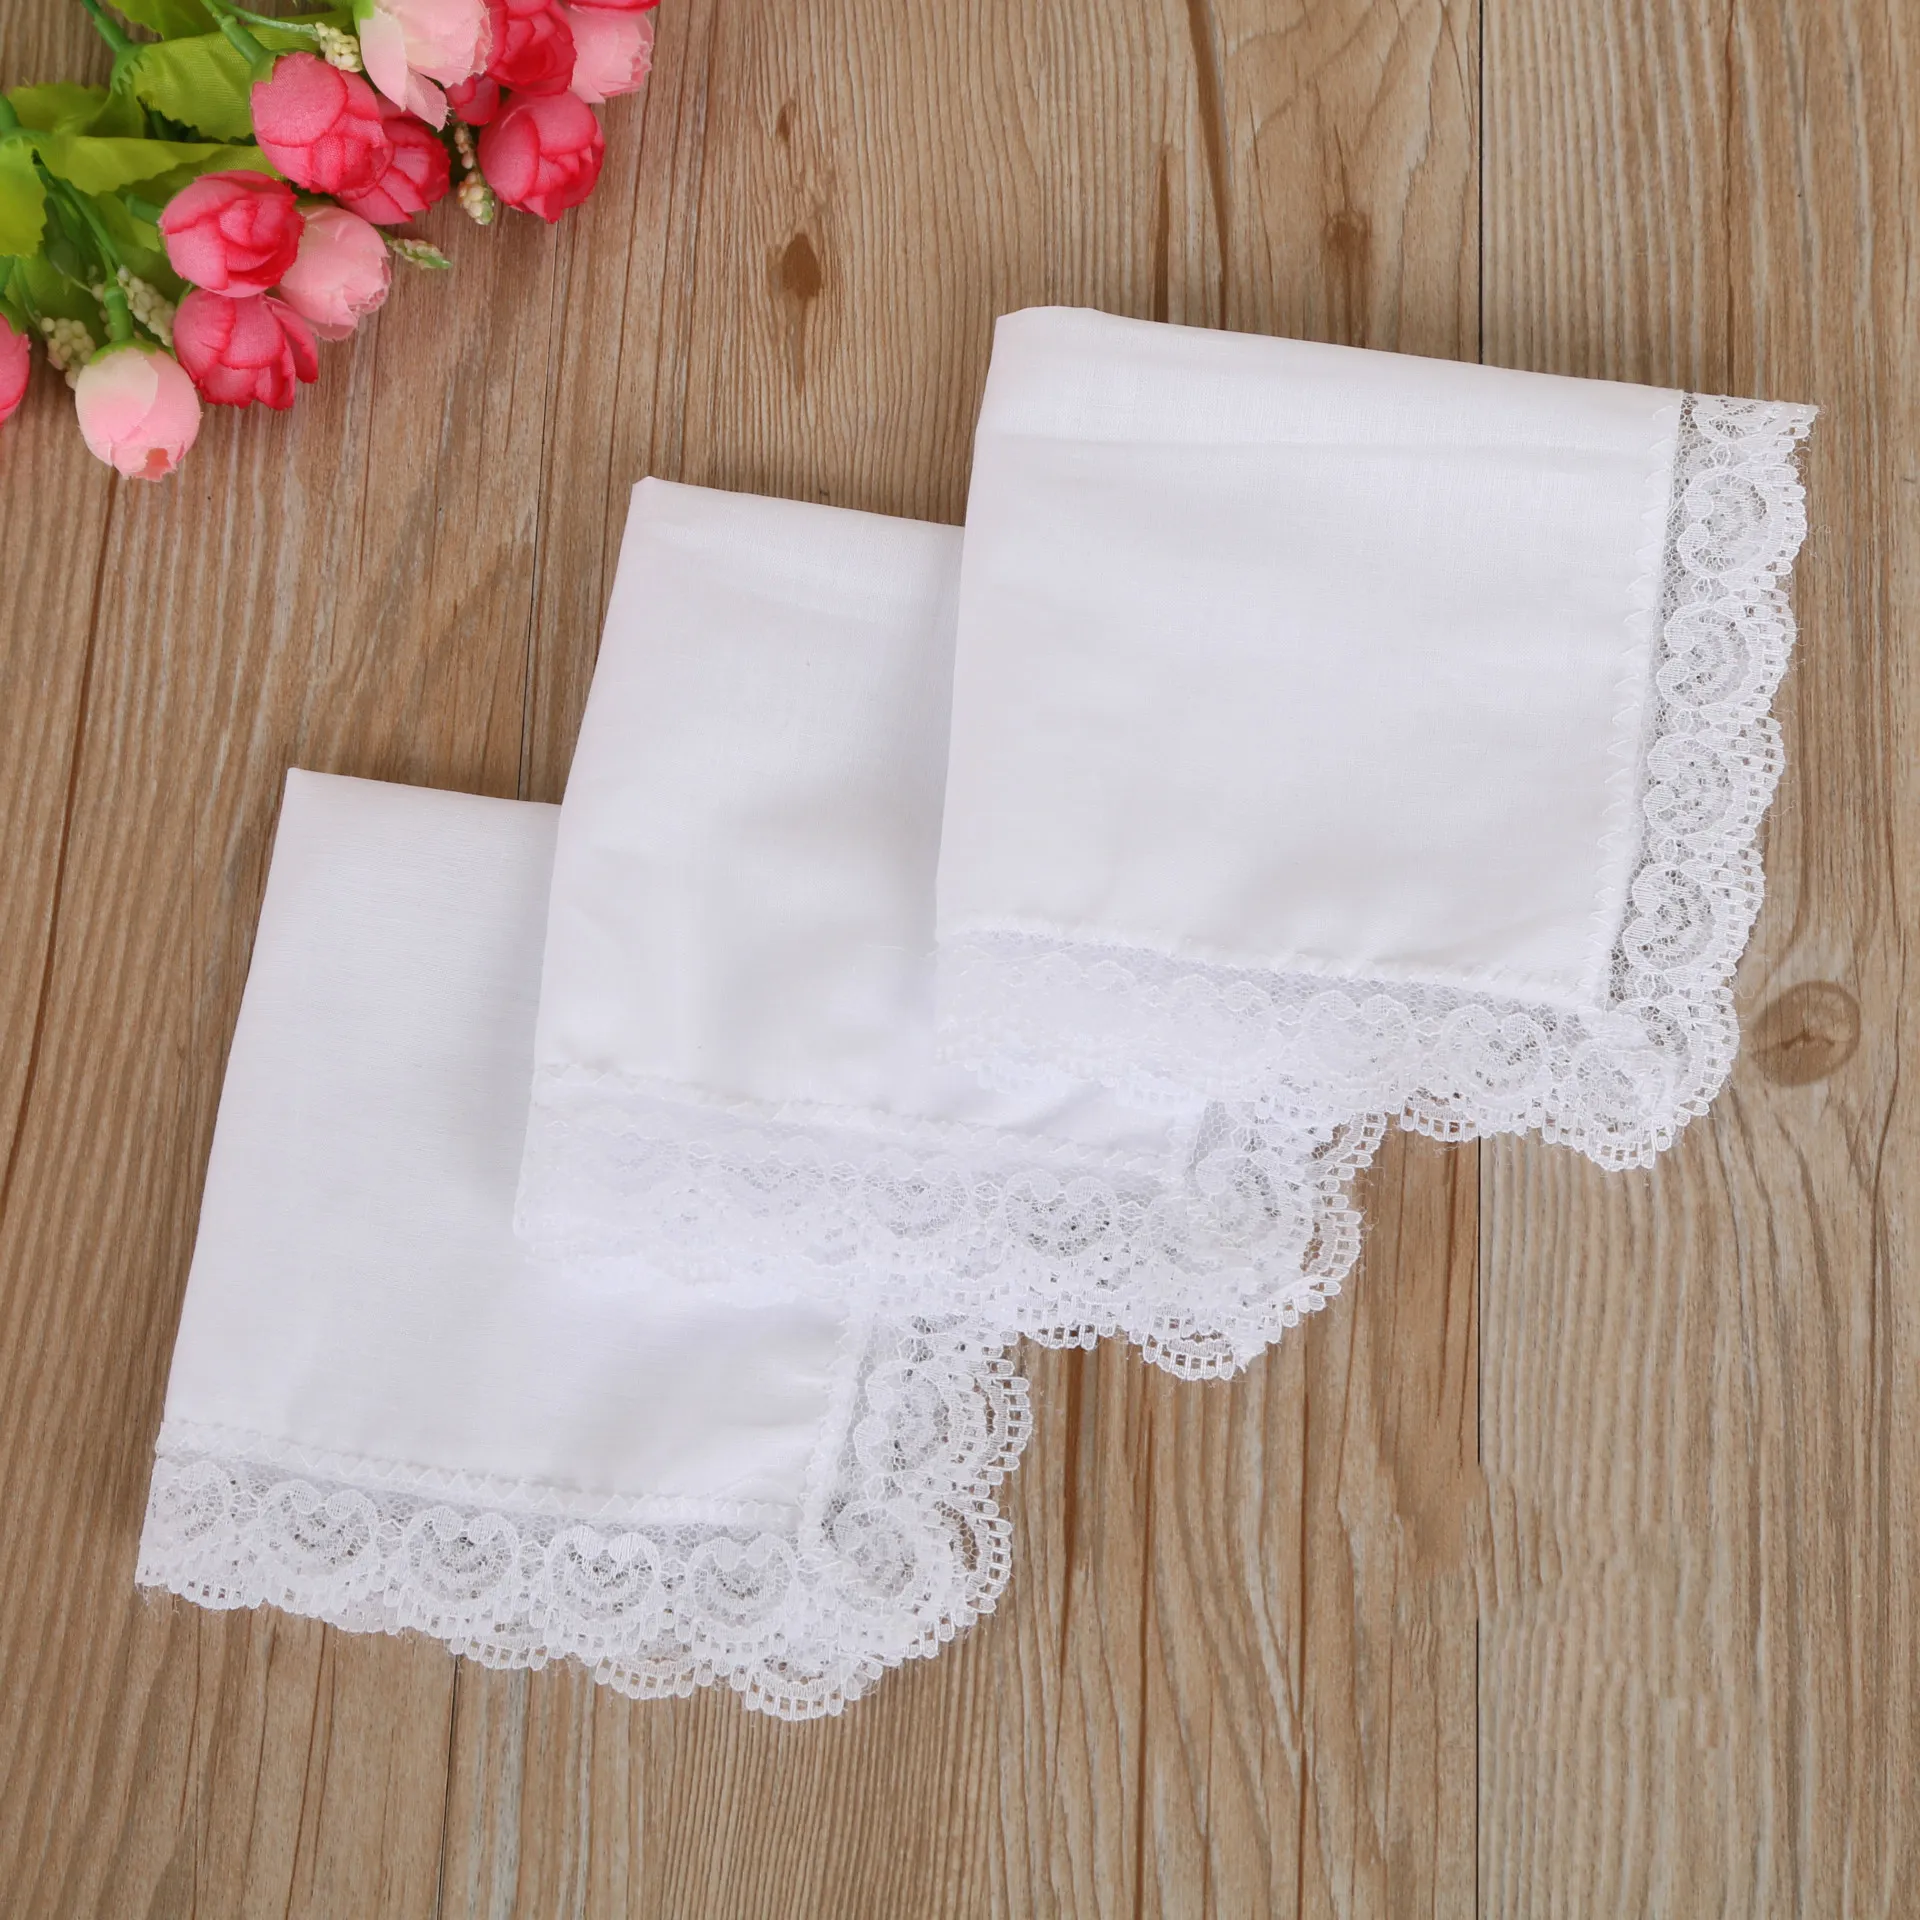 12PCS DIY handmade graffiti cotton handkerchief fashion designer white cloth 25*25cm napkins woman wedding gifts for wedding's decoration cloth napkin